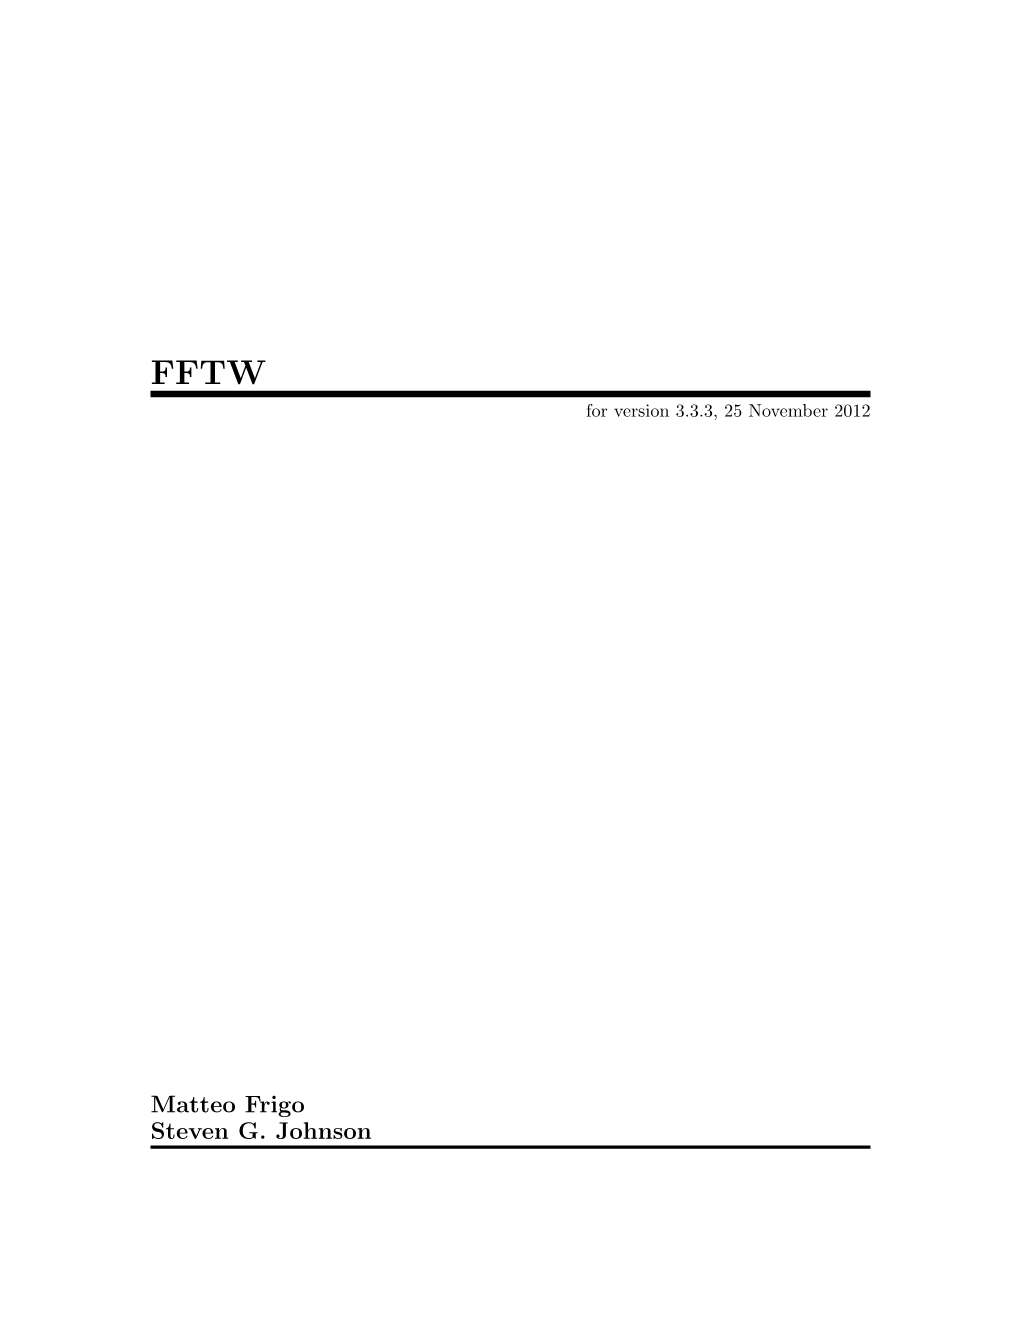 Matteo Frigo Steven G. Johnson This Manual Is for FFTW (Version 3.3.3, 25 November 2012)